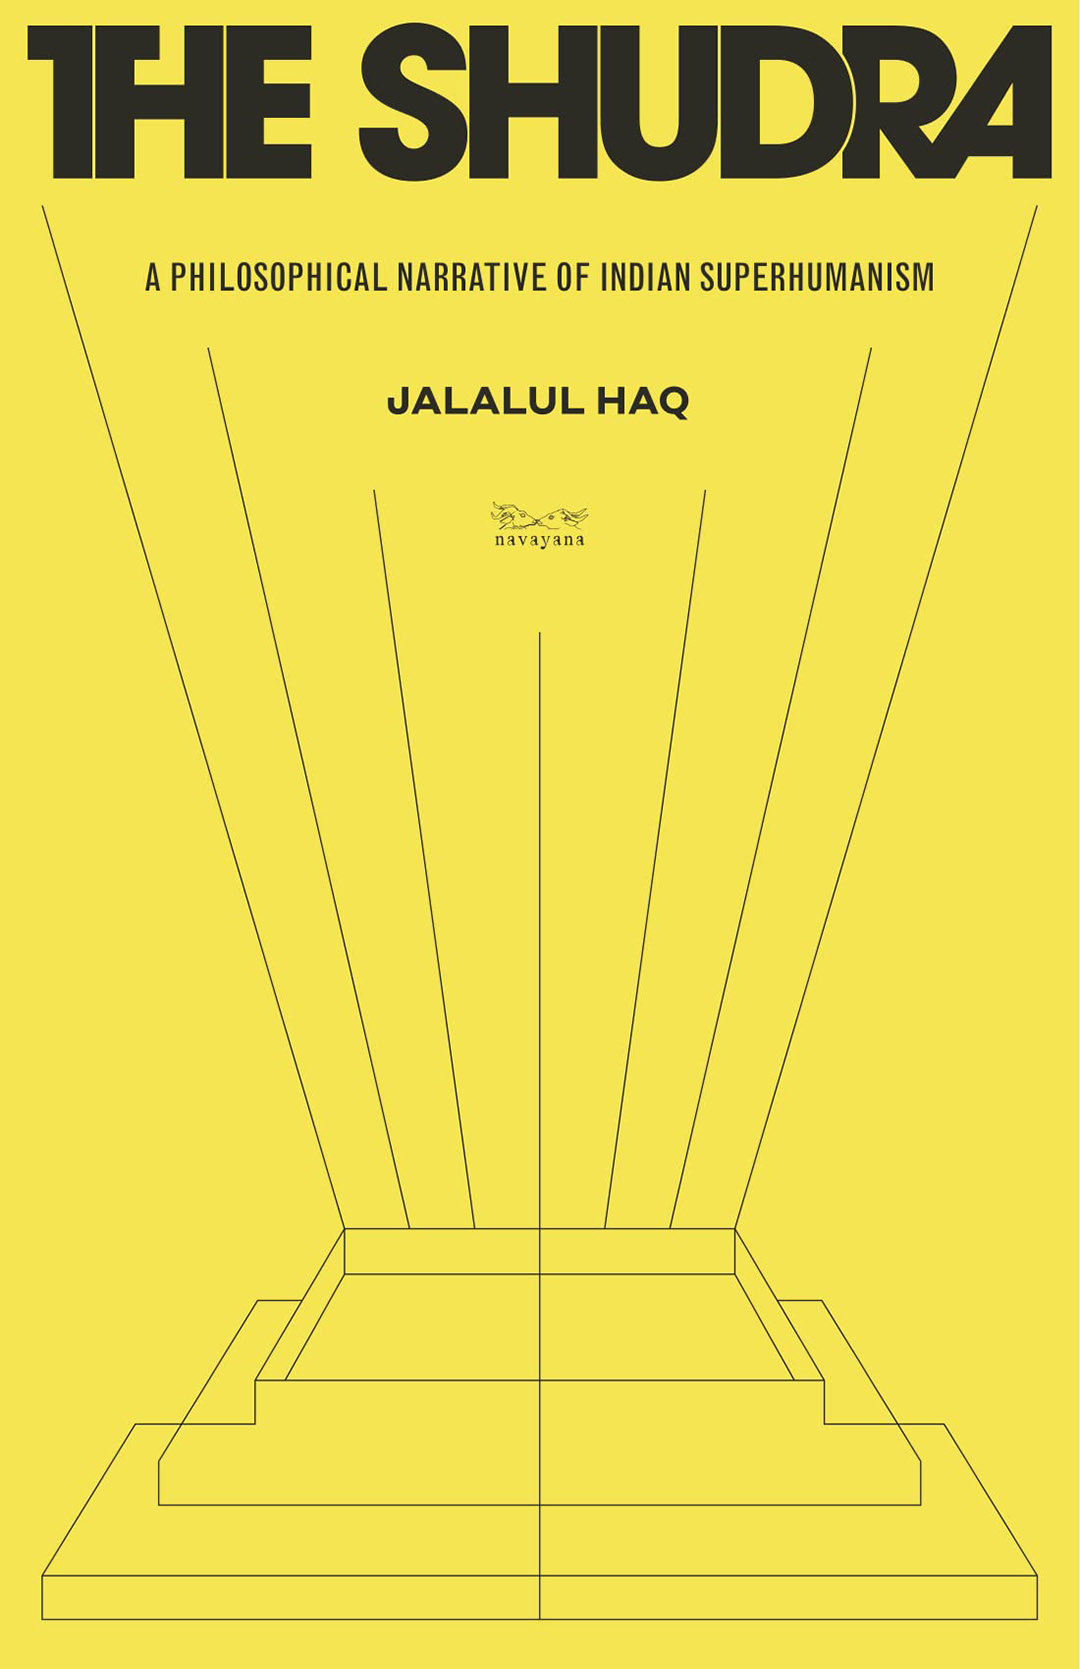 Jalalul Haq and the idea of the superhuman